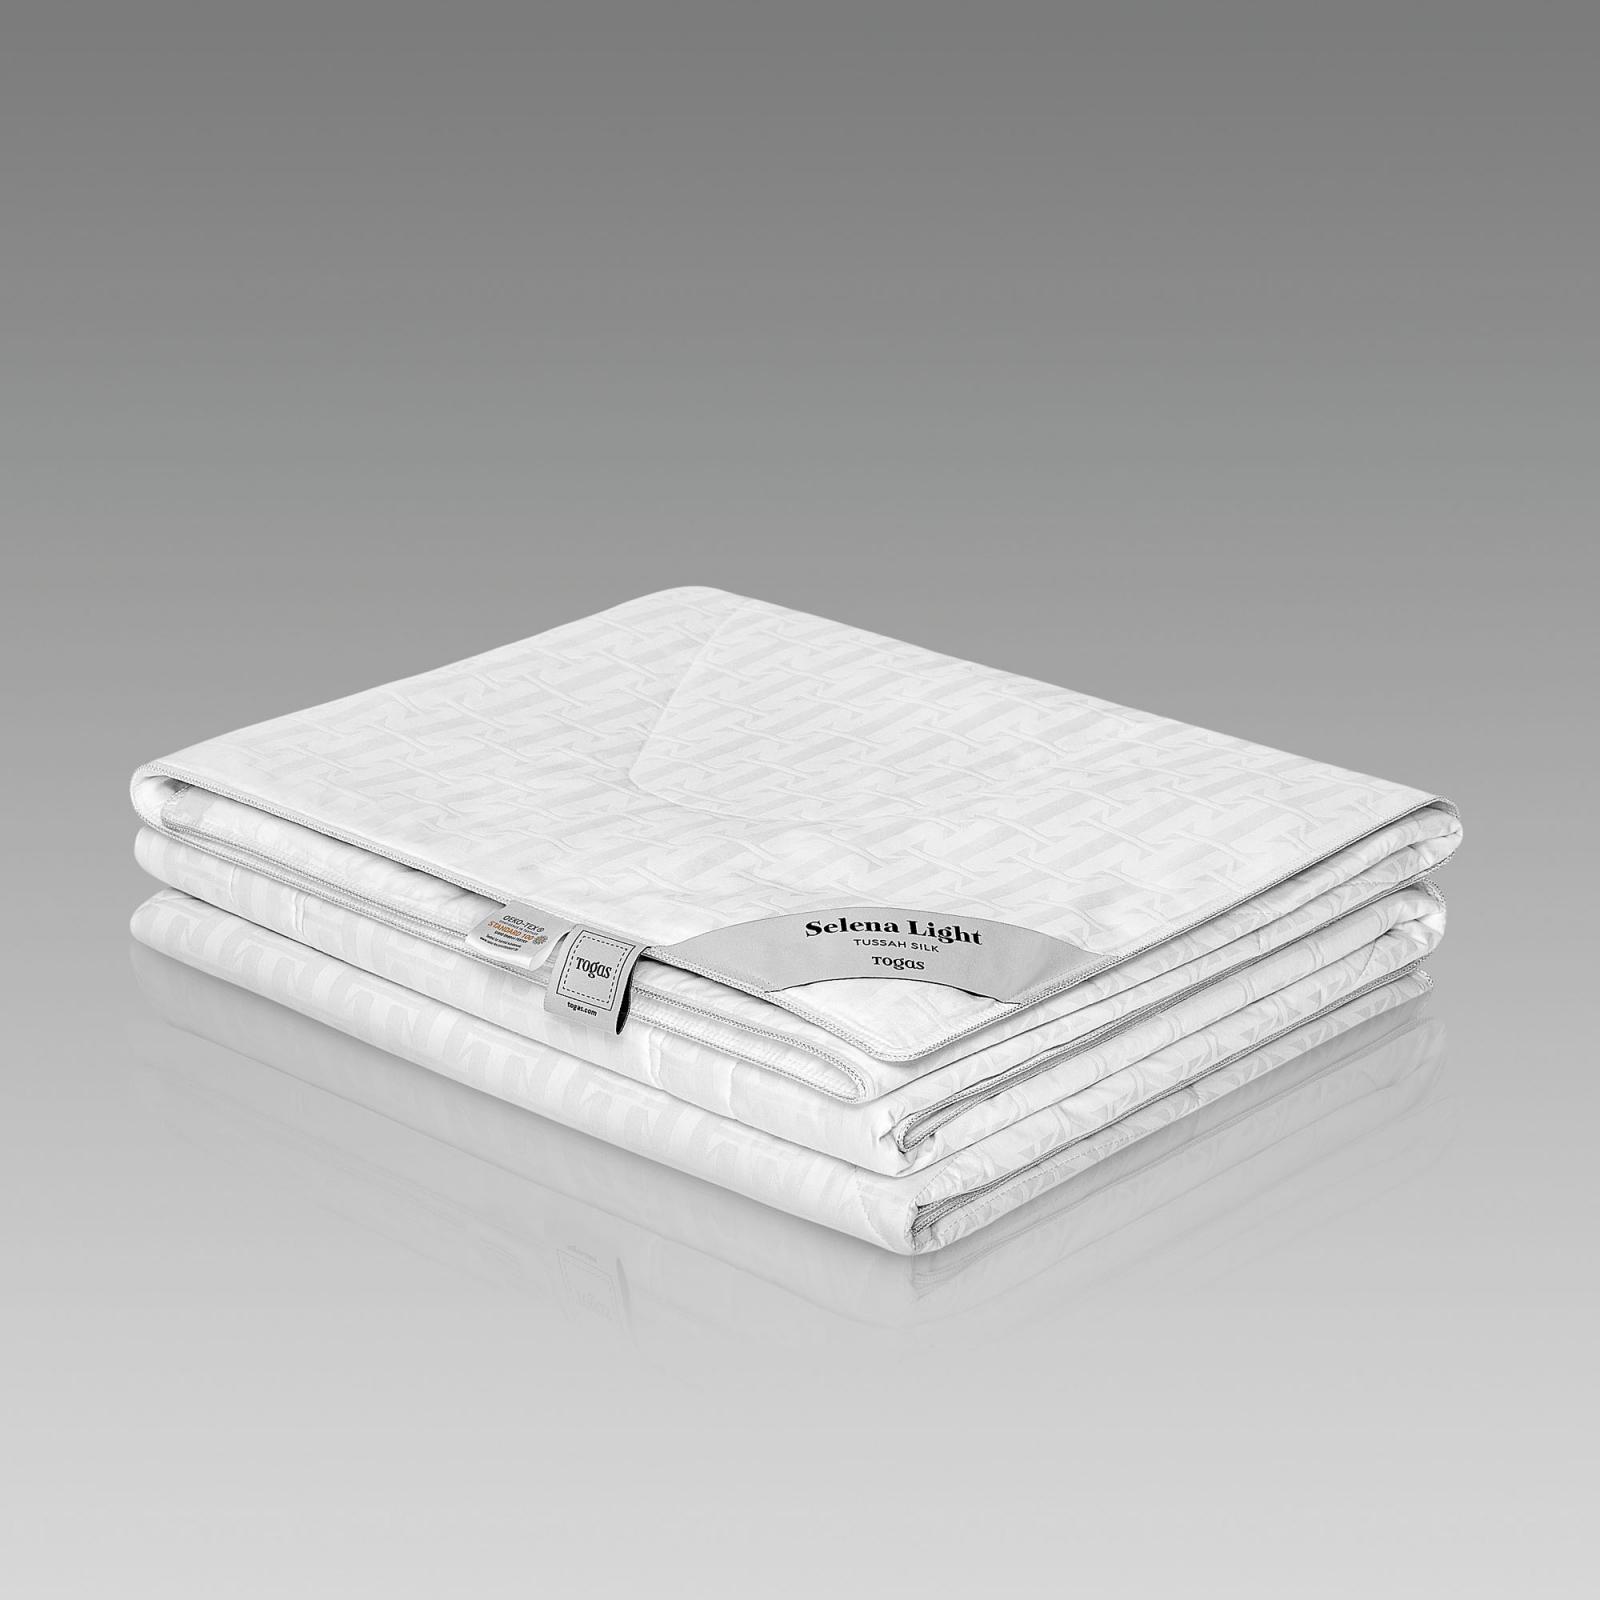 Одеяло Togas Селена Лайт 200х210 см (20.04.16.0108) одеяло estia аоста лайт 200x210 белое